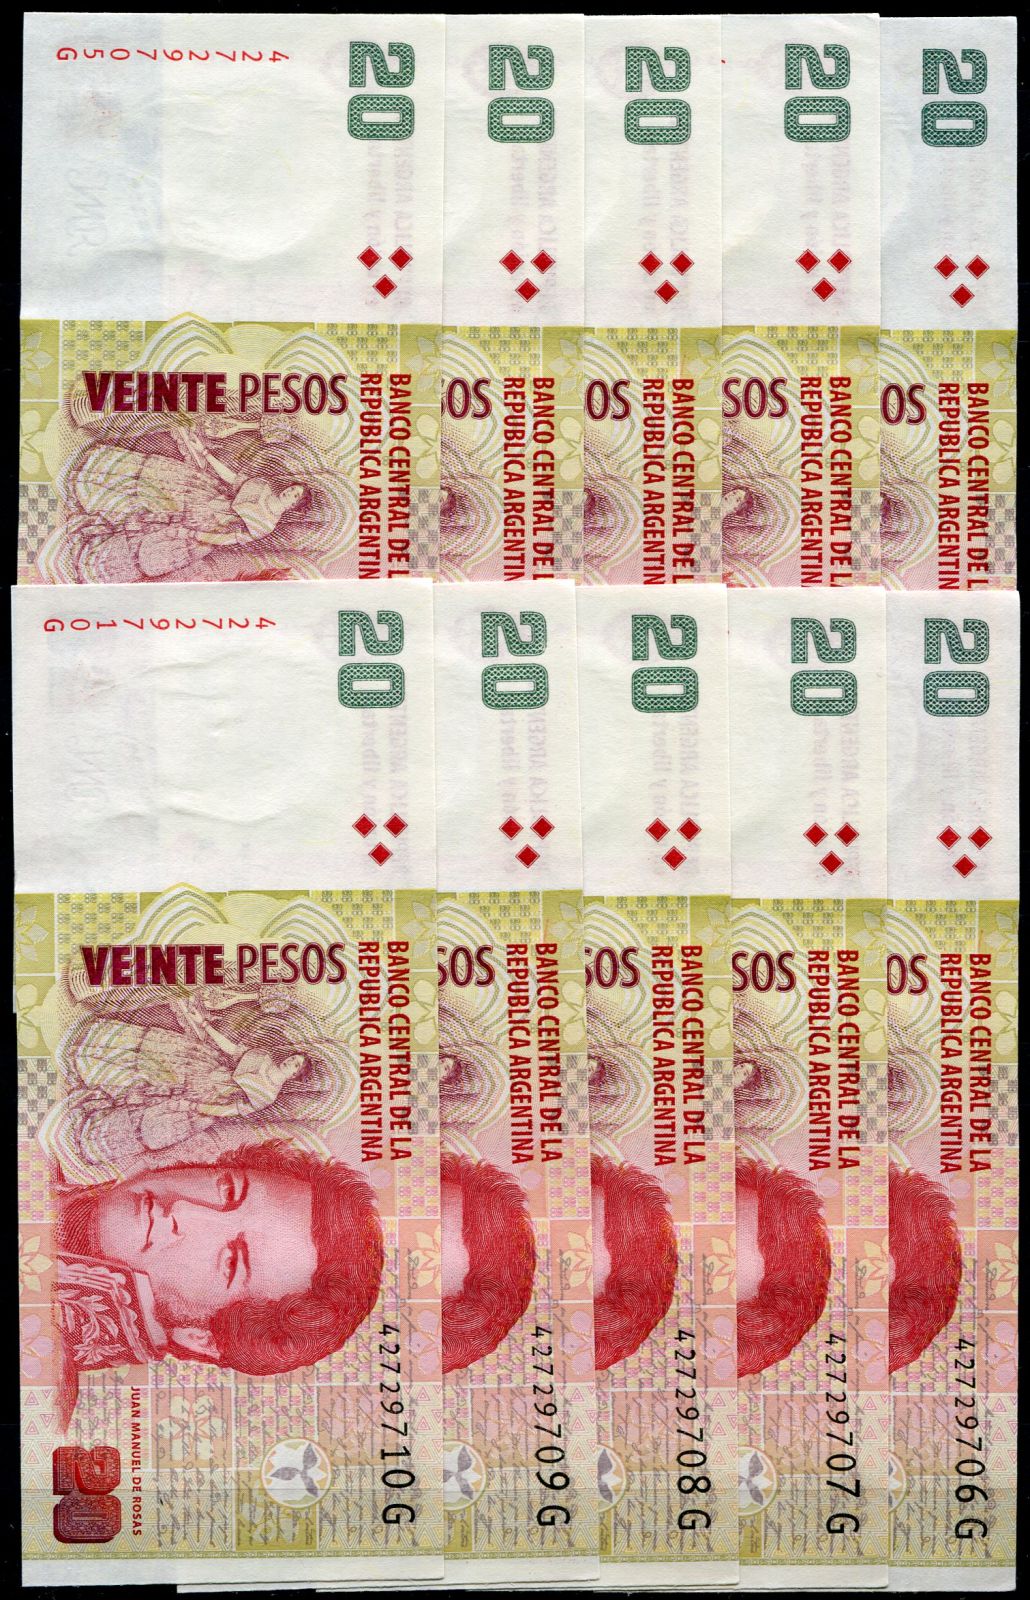 10x Argentyna (P 355b.2) banknot 20 pesos (2018) - UNC